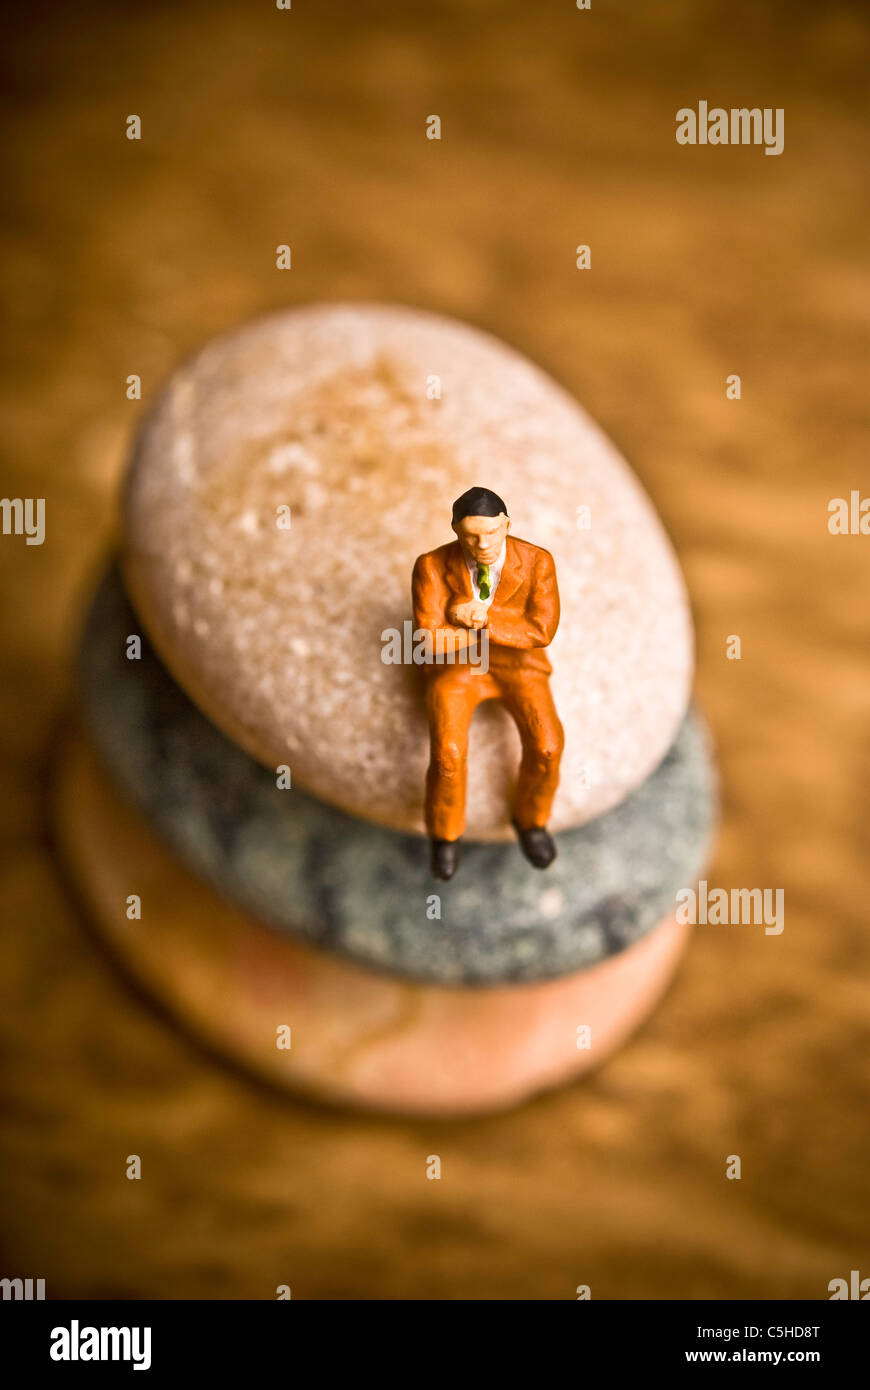 man figurine sitting on a stone, solitude concept Stock Photo